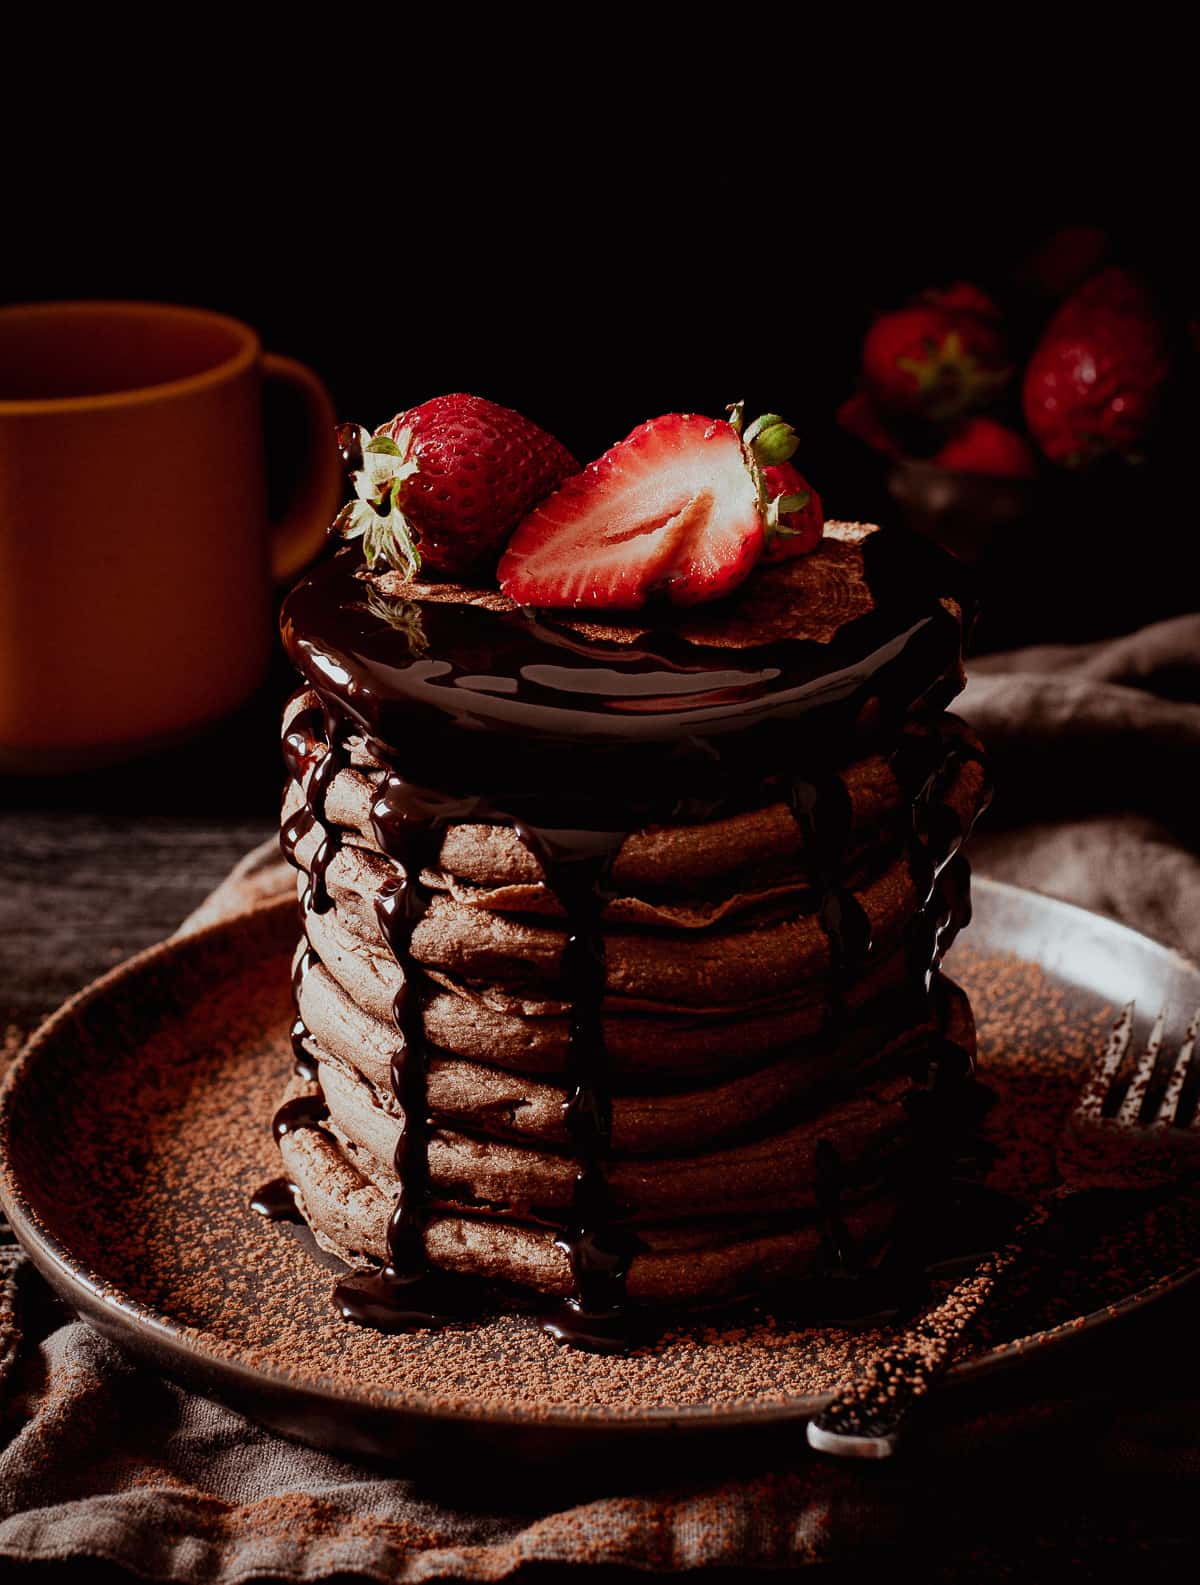 vegan chocolate pancakes with sauce and strawberries